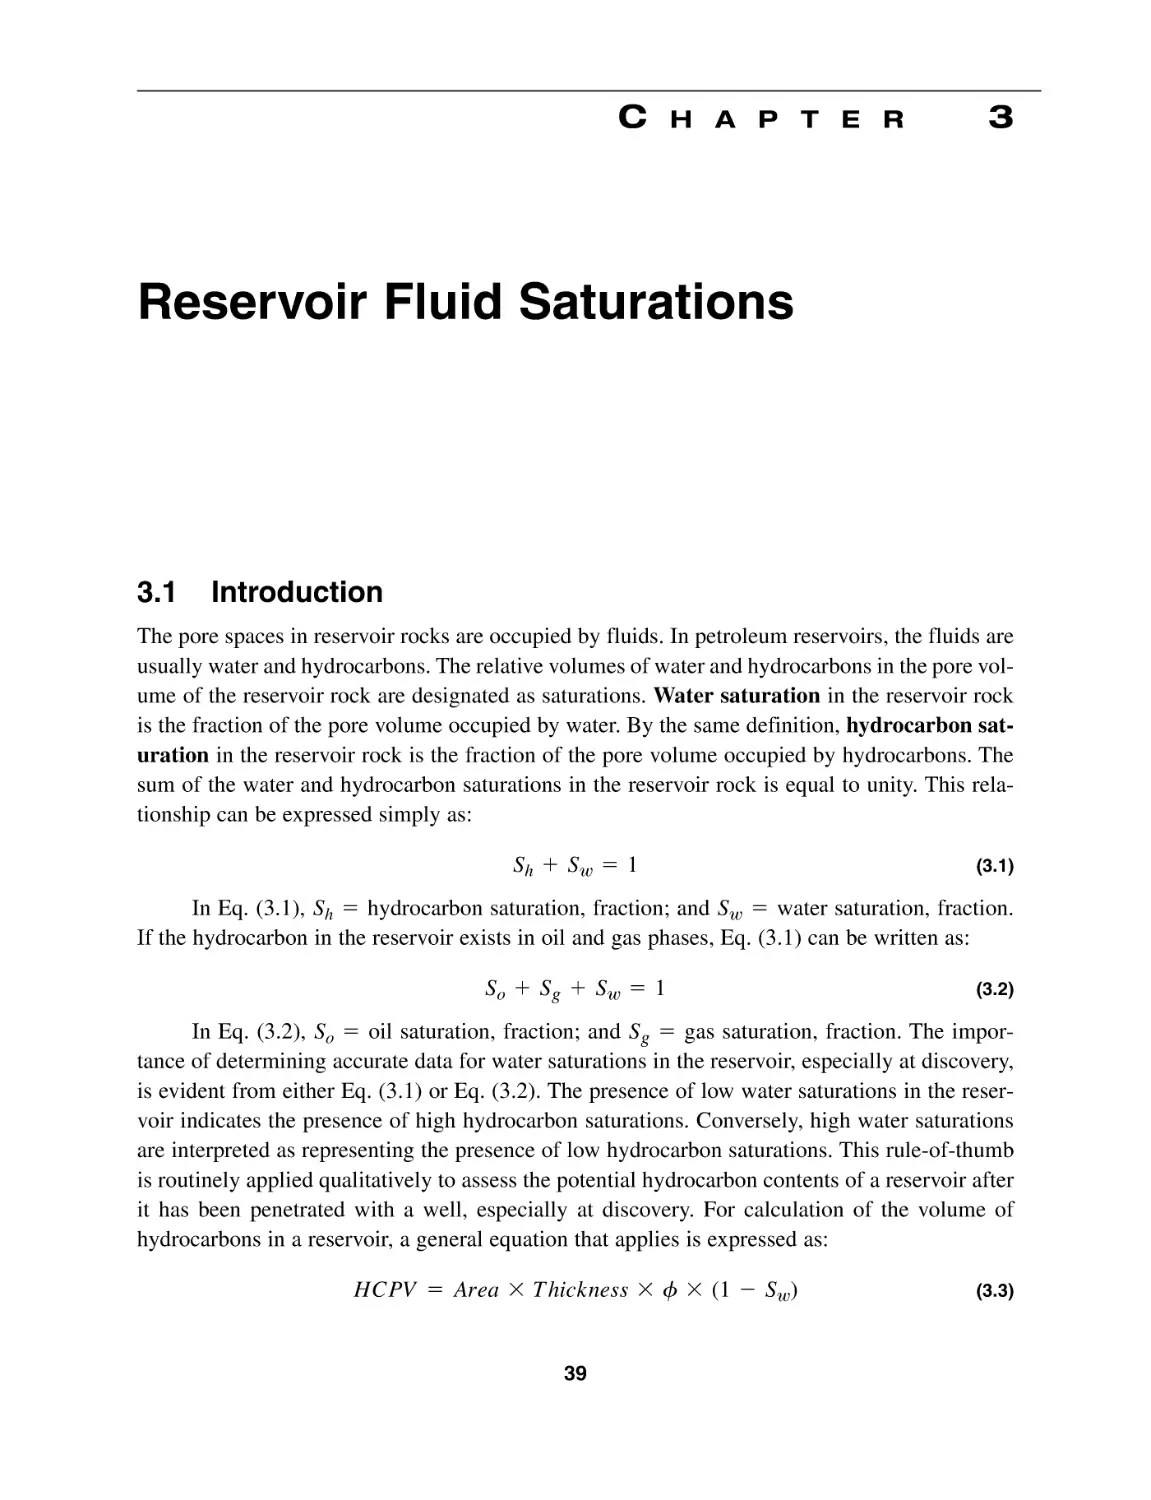 Chapter 3 Reservoir Fluid Saturations
3.1 Introduction